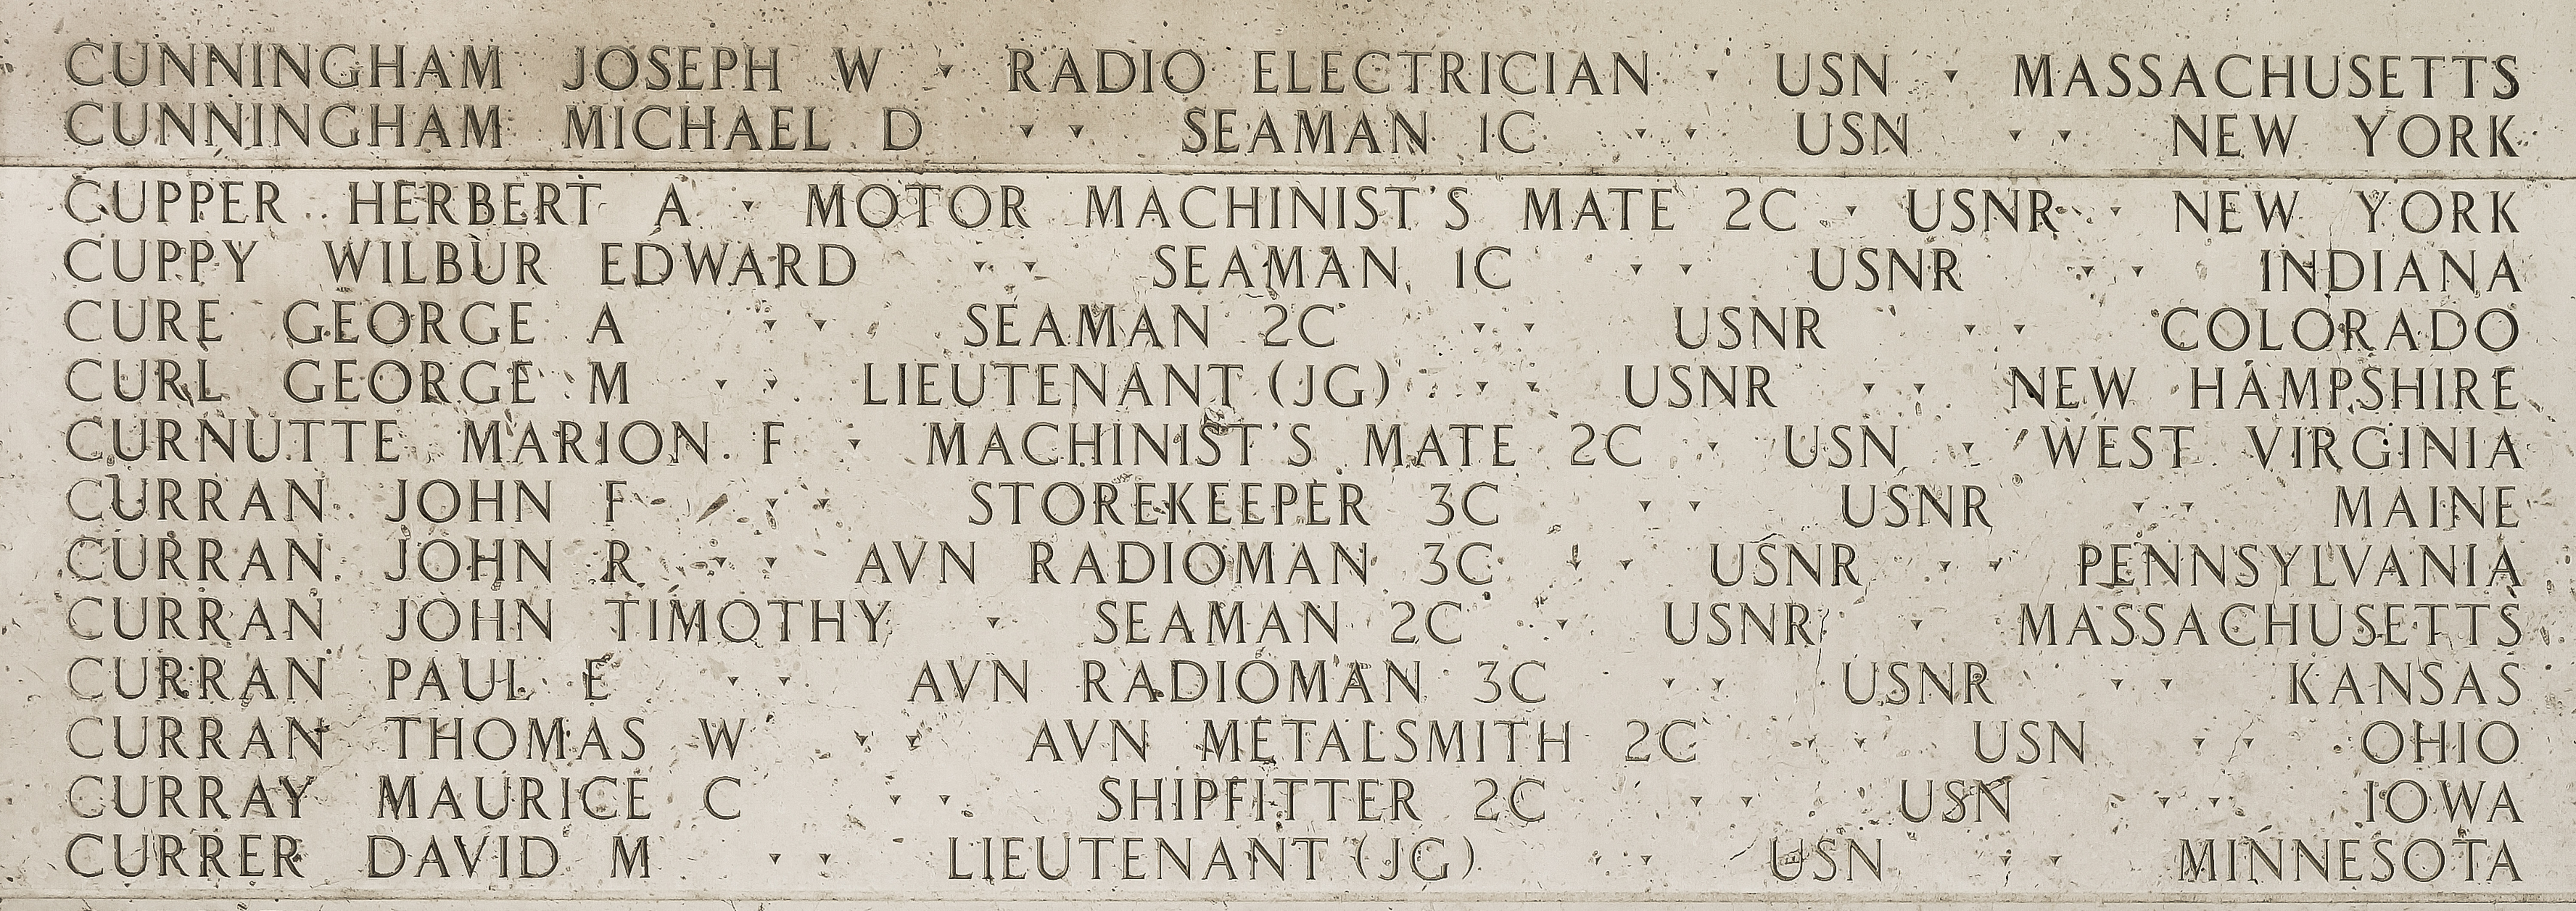 Joseph W. Cunningham, Radio Electrician